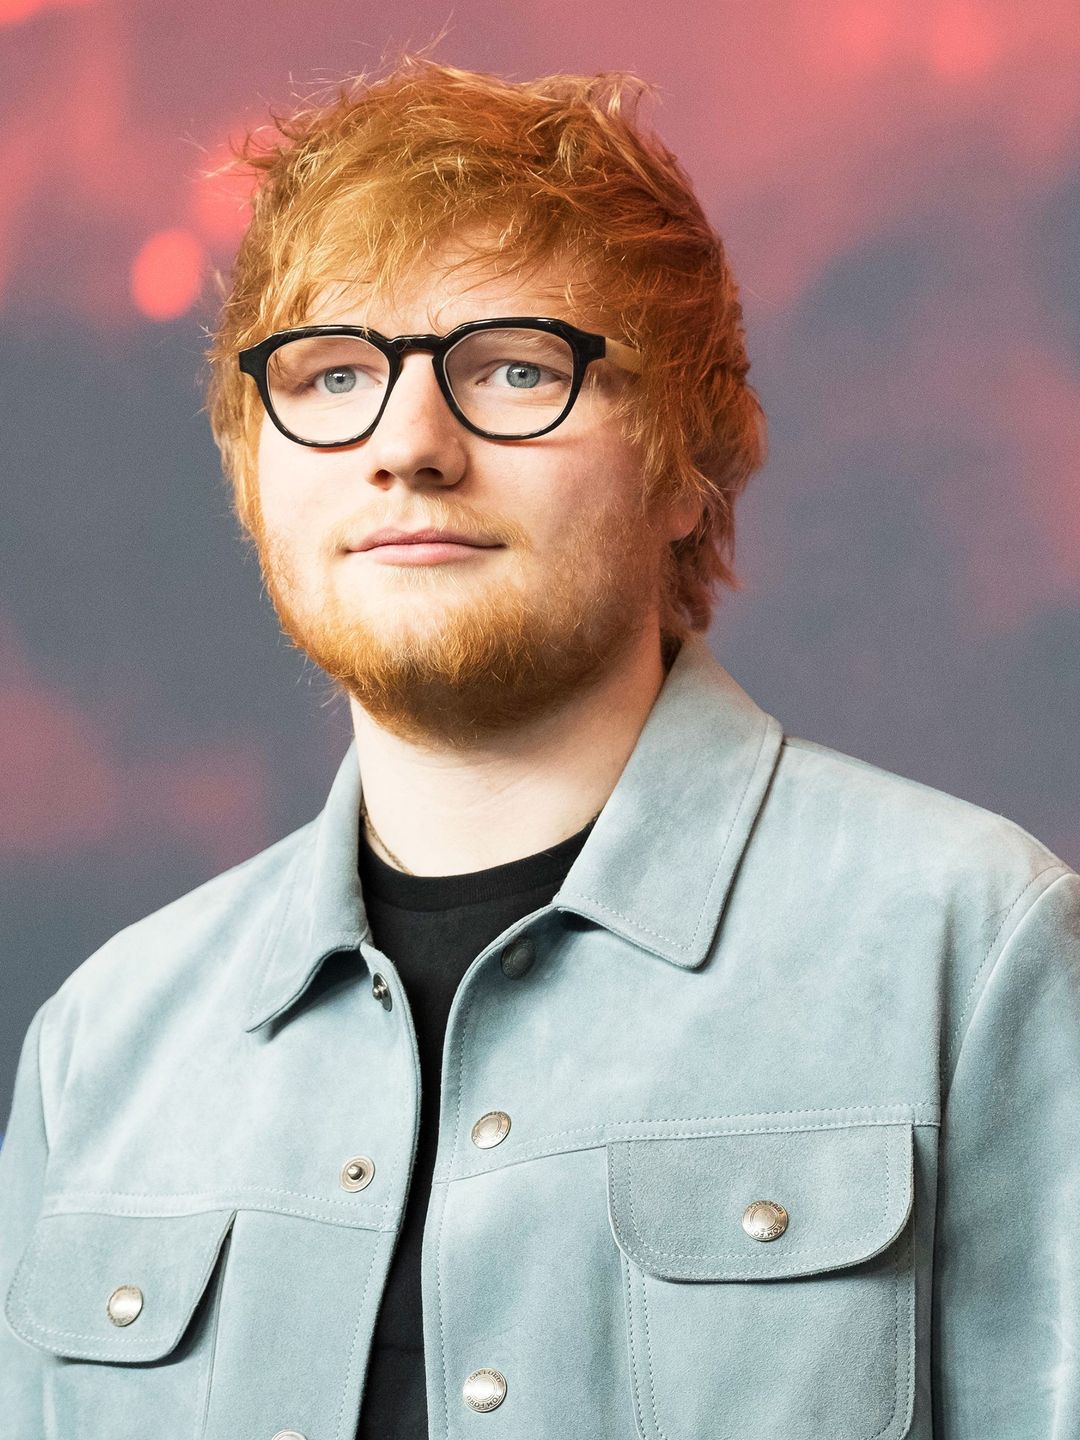 Ed Sheeran does he have kids